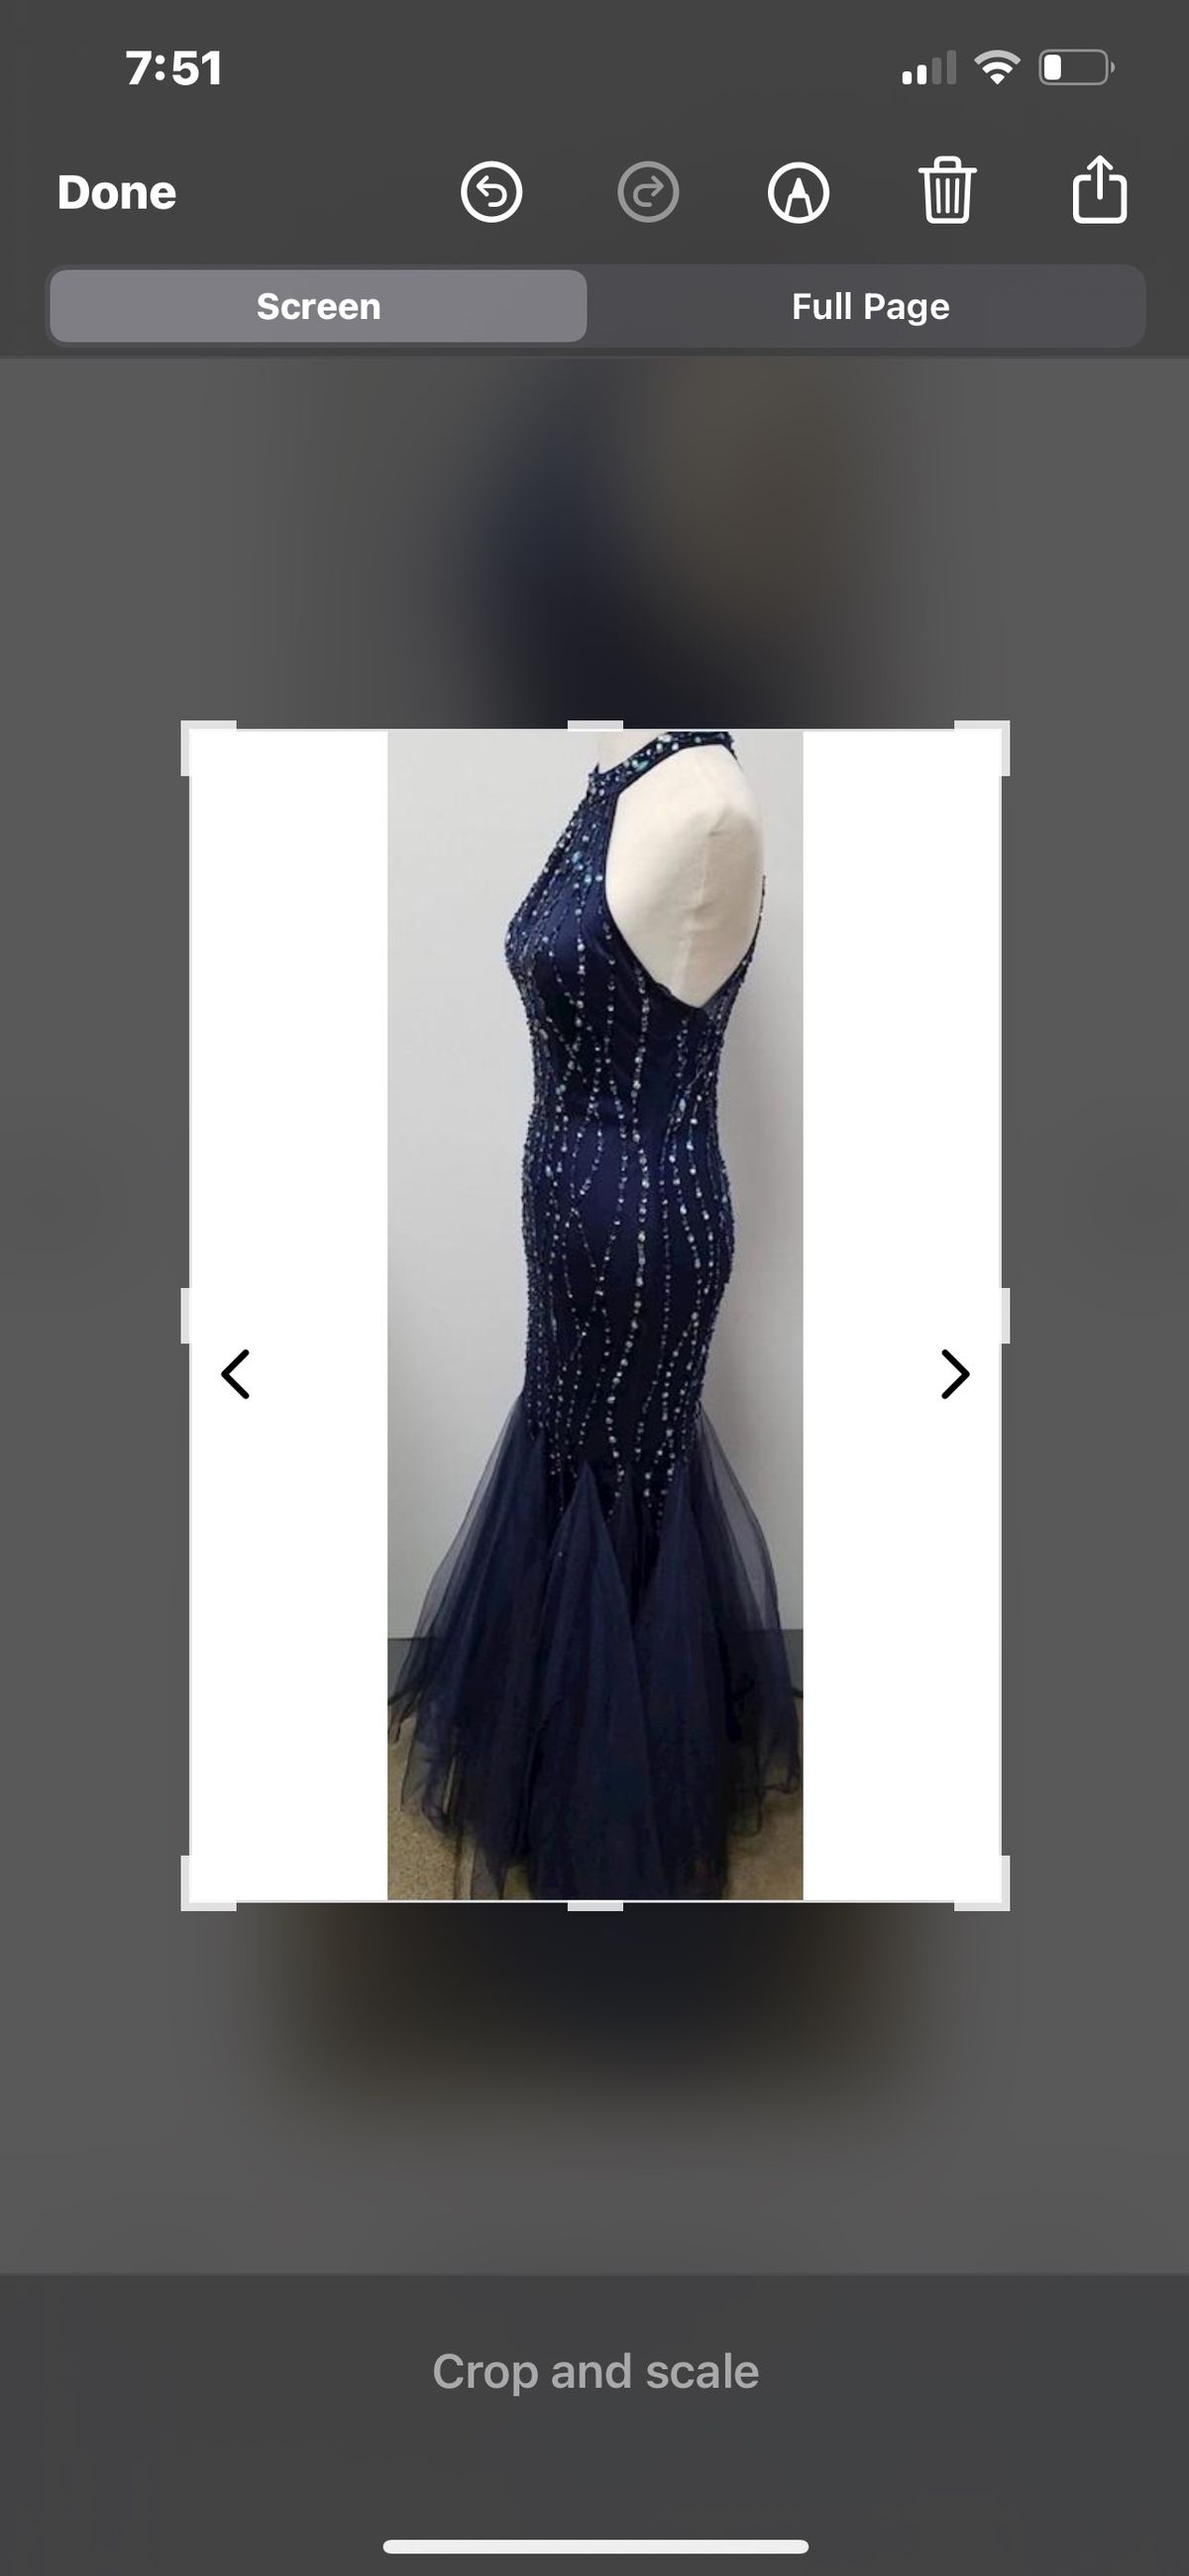 Camille La Vie Size 6 Prom Halter Blue Mermaid Dress on Queenly